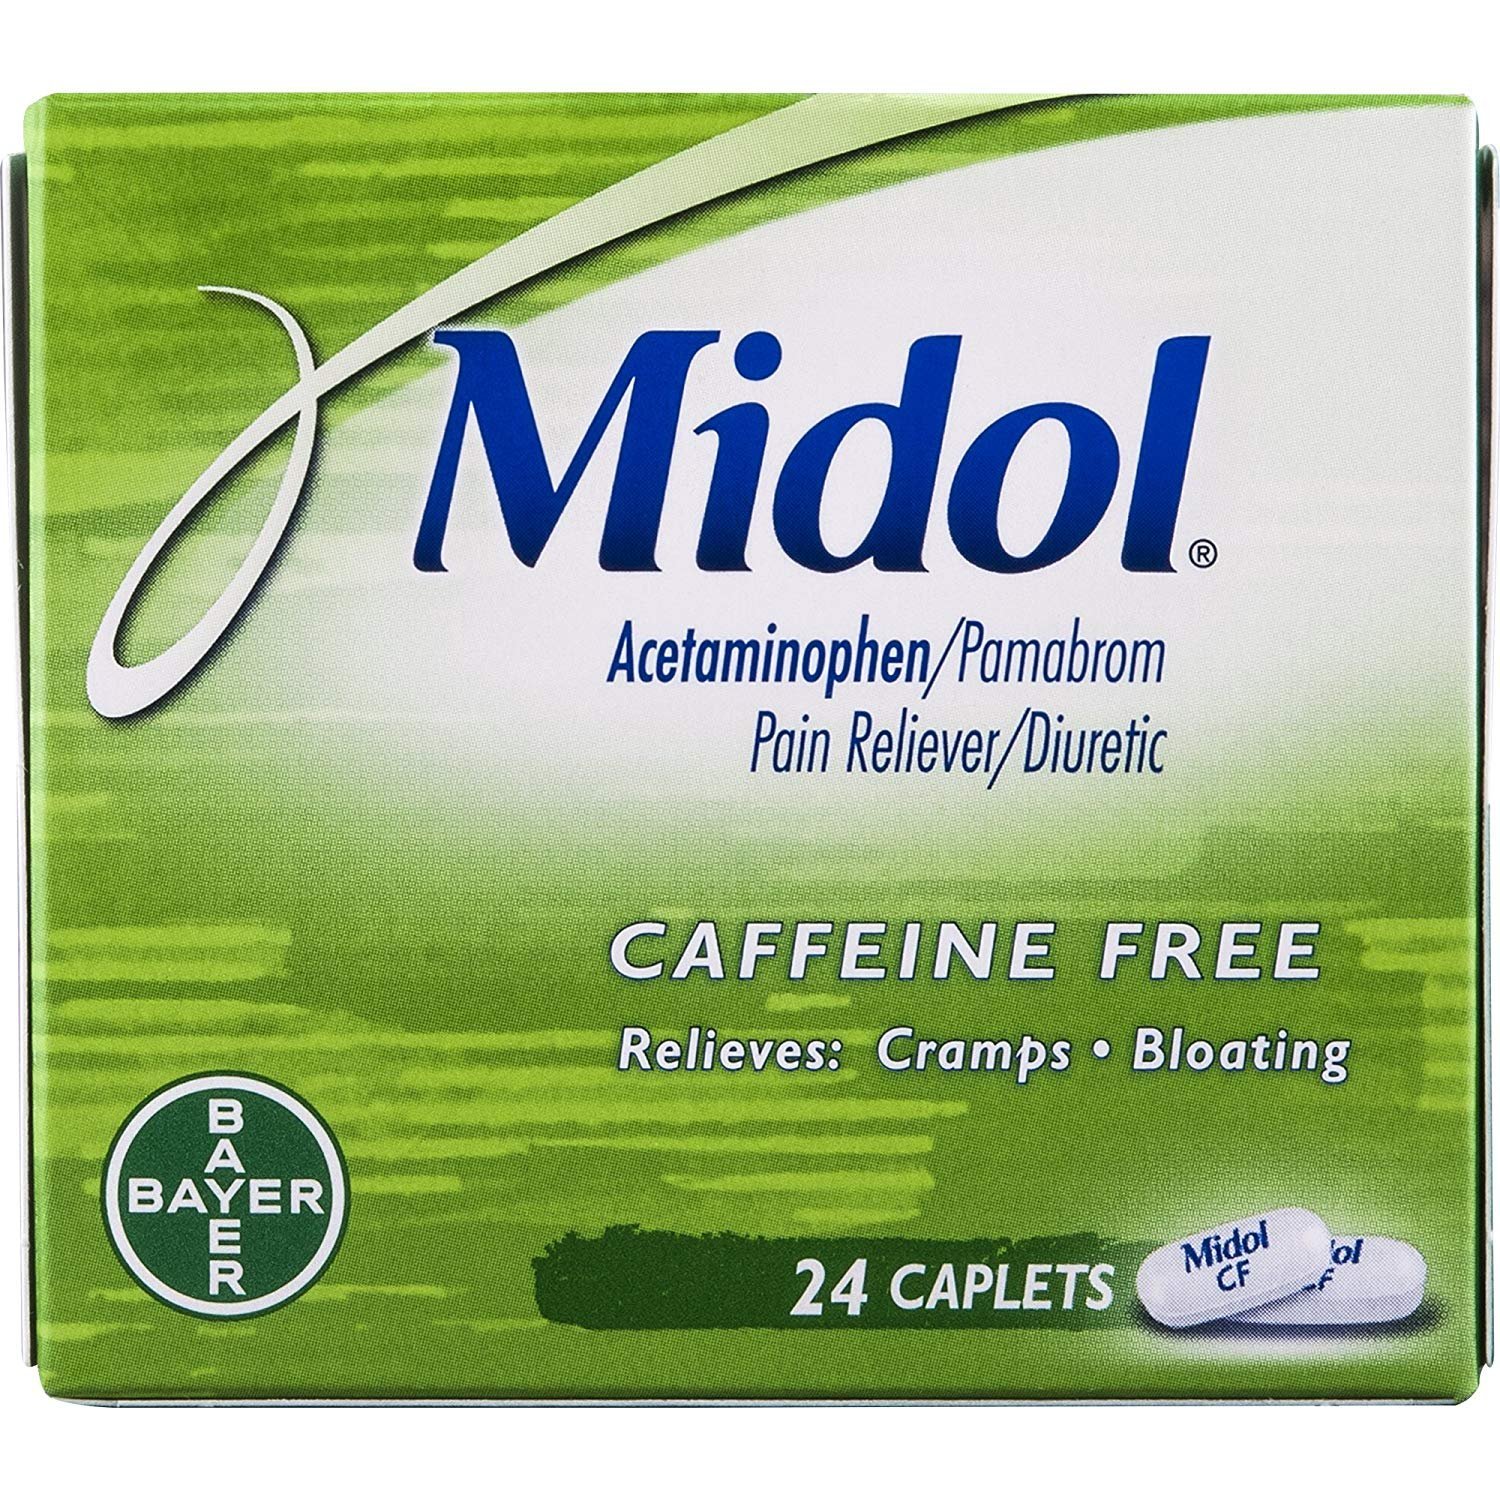 Midol complete caffeine free